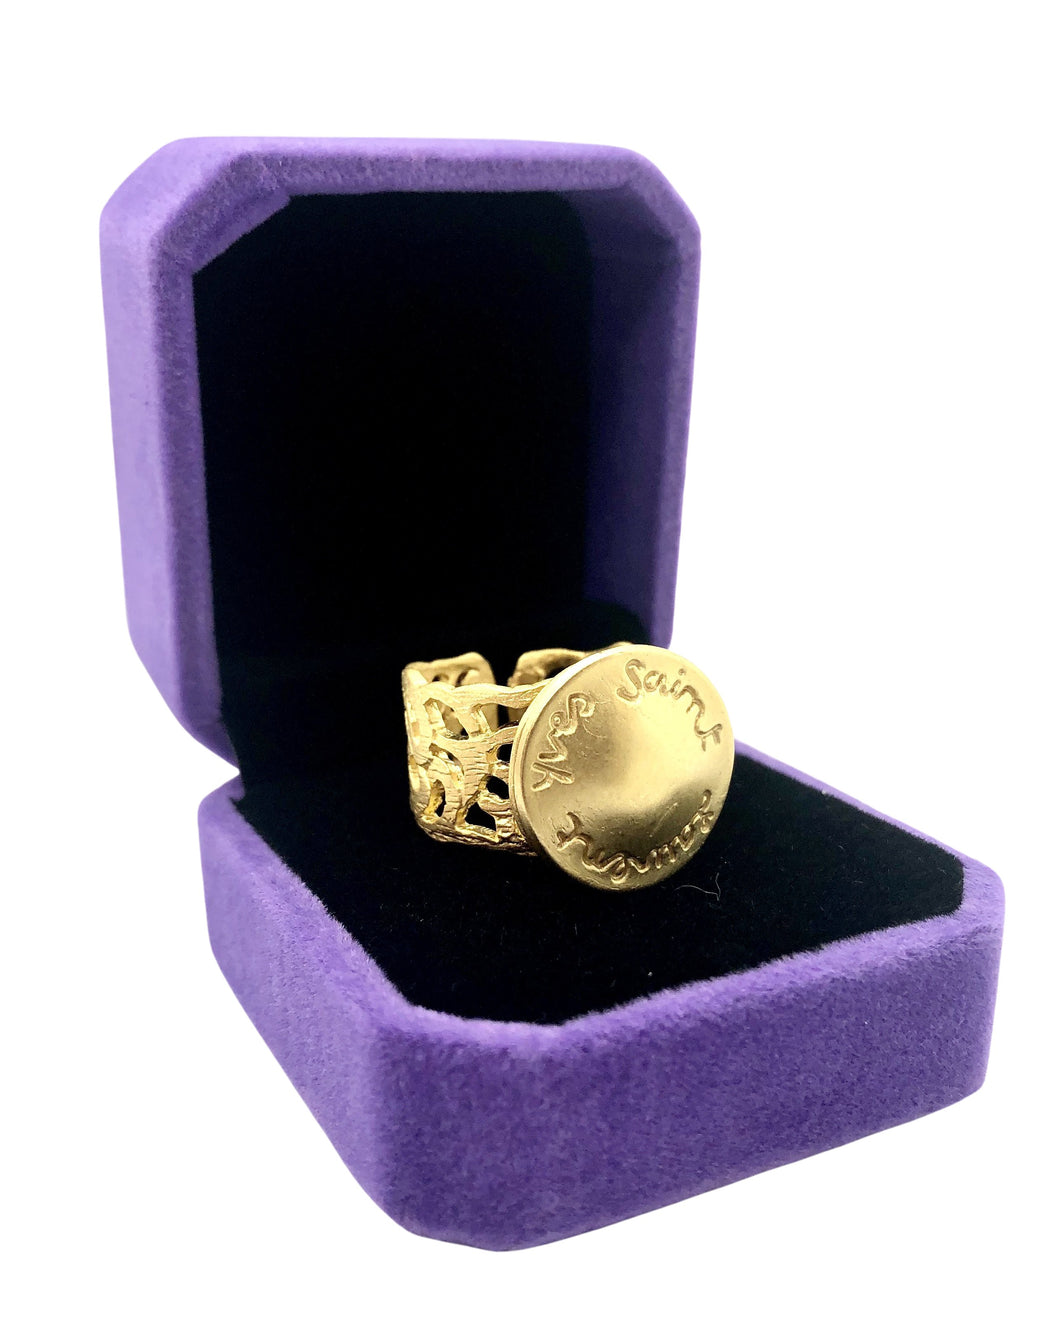 Repurposed Yves Saint Laurent Matte Gold Adjustable Ring